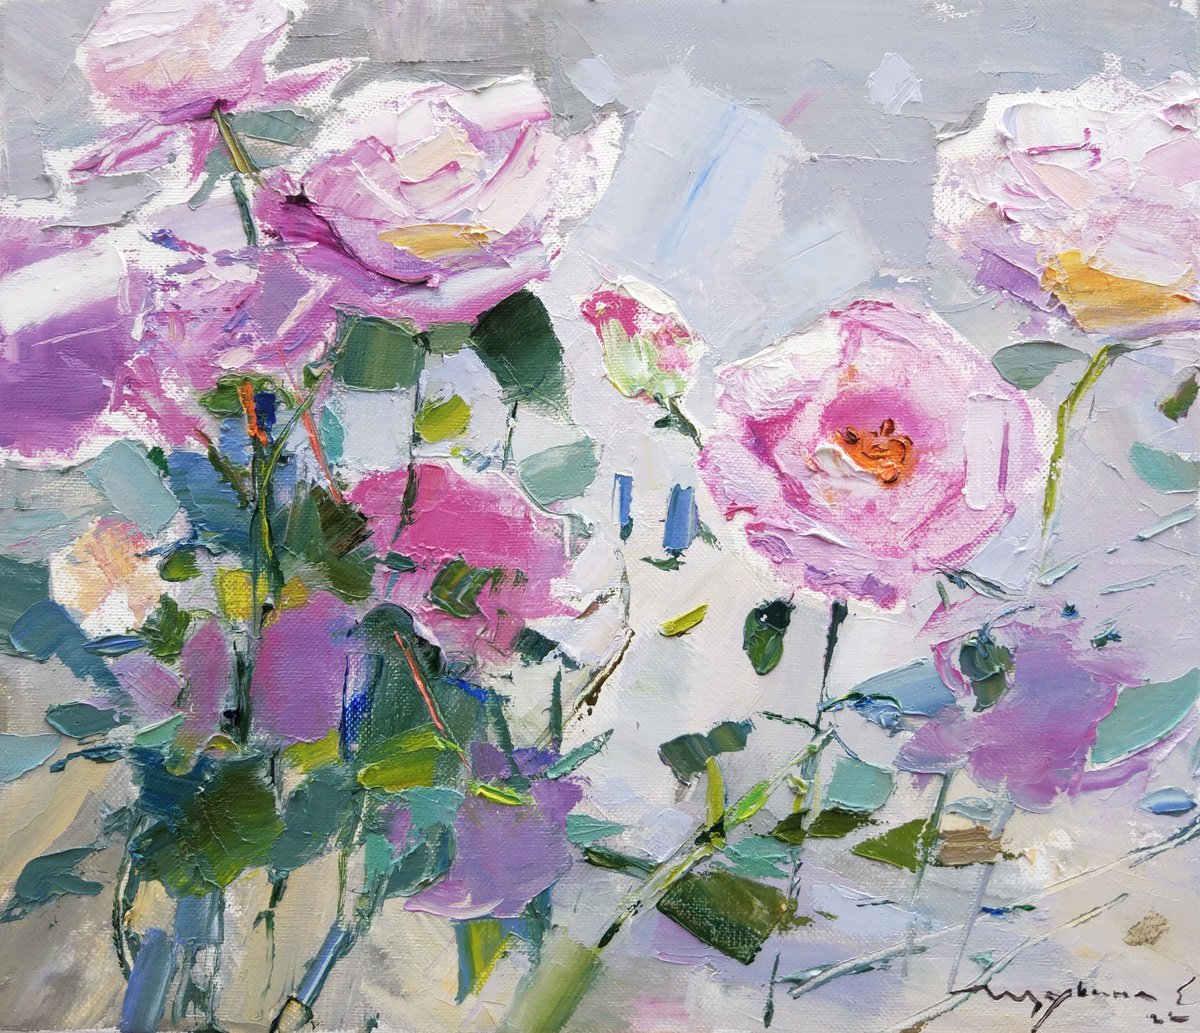 Roses on tender grey. Original plein air oil painting by Helen Shukina